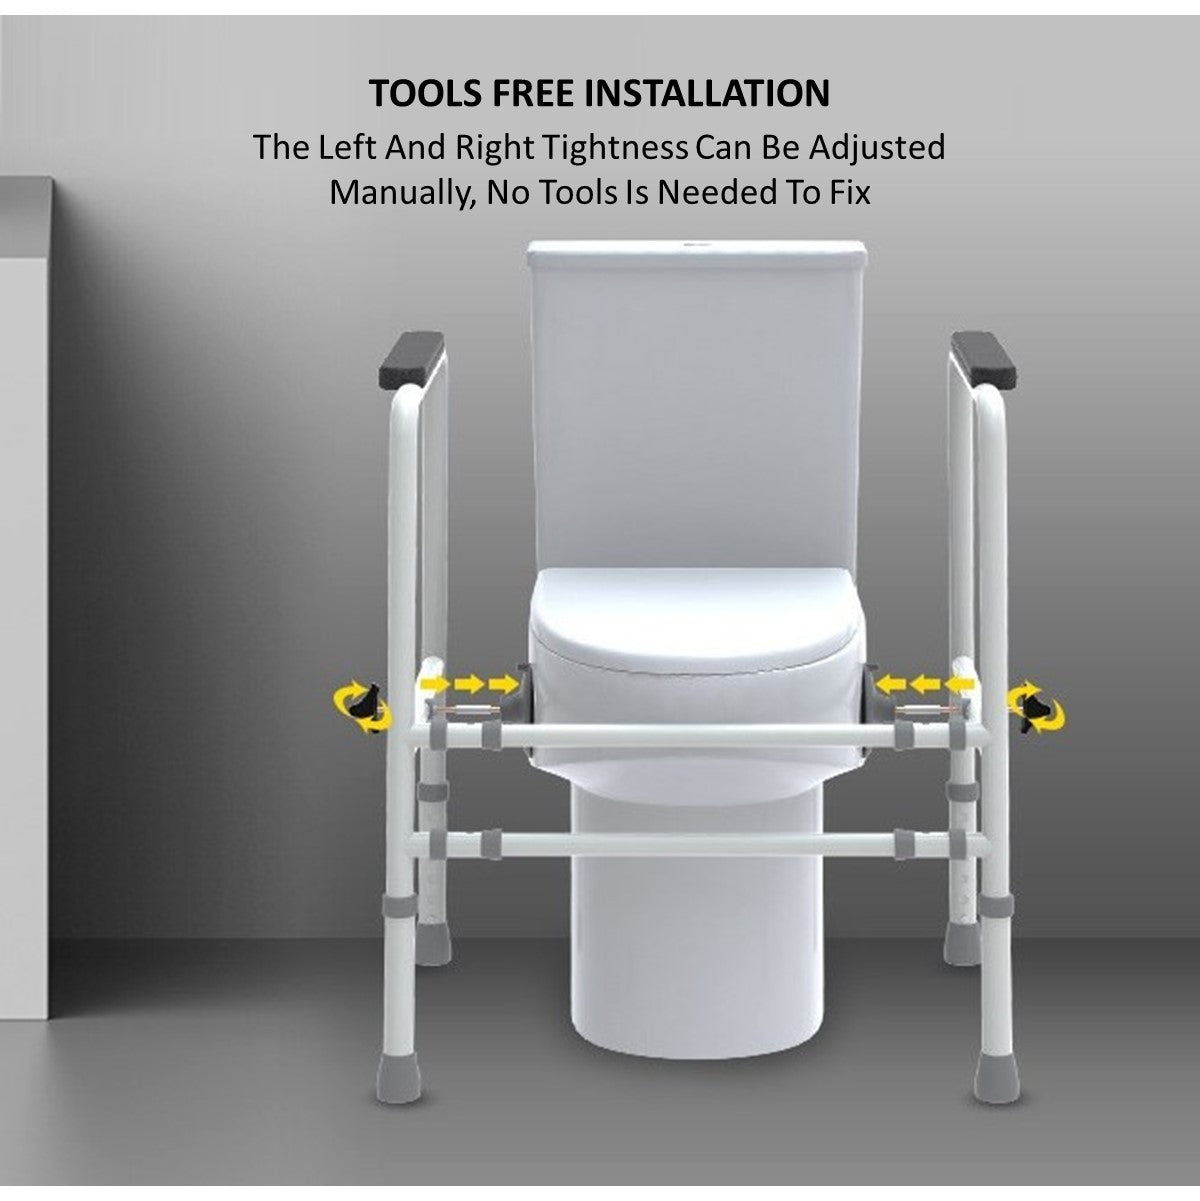 Adjustable Safety Rail Toilet Bowl Frame